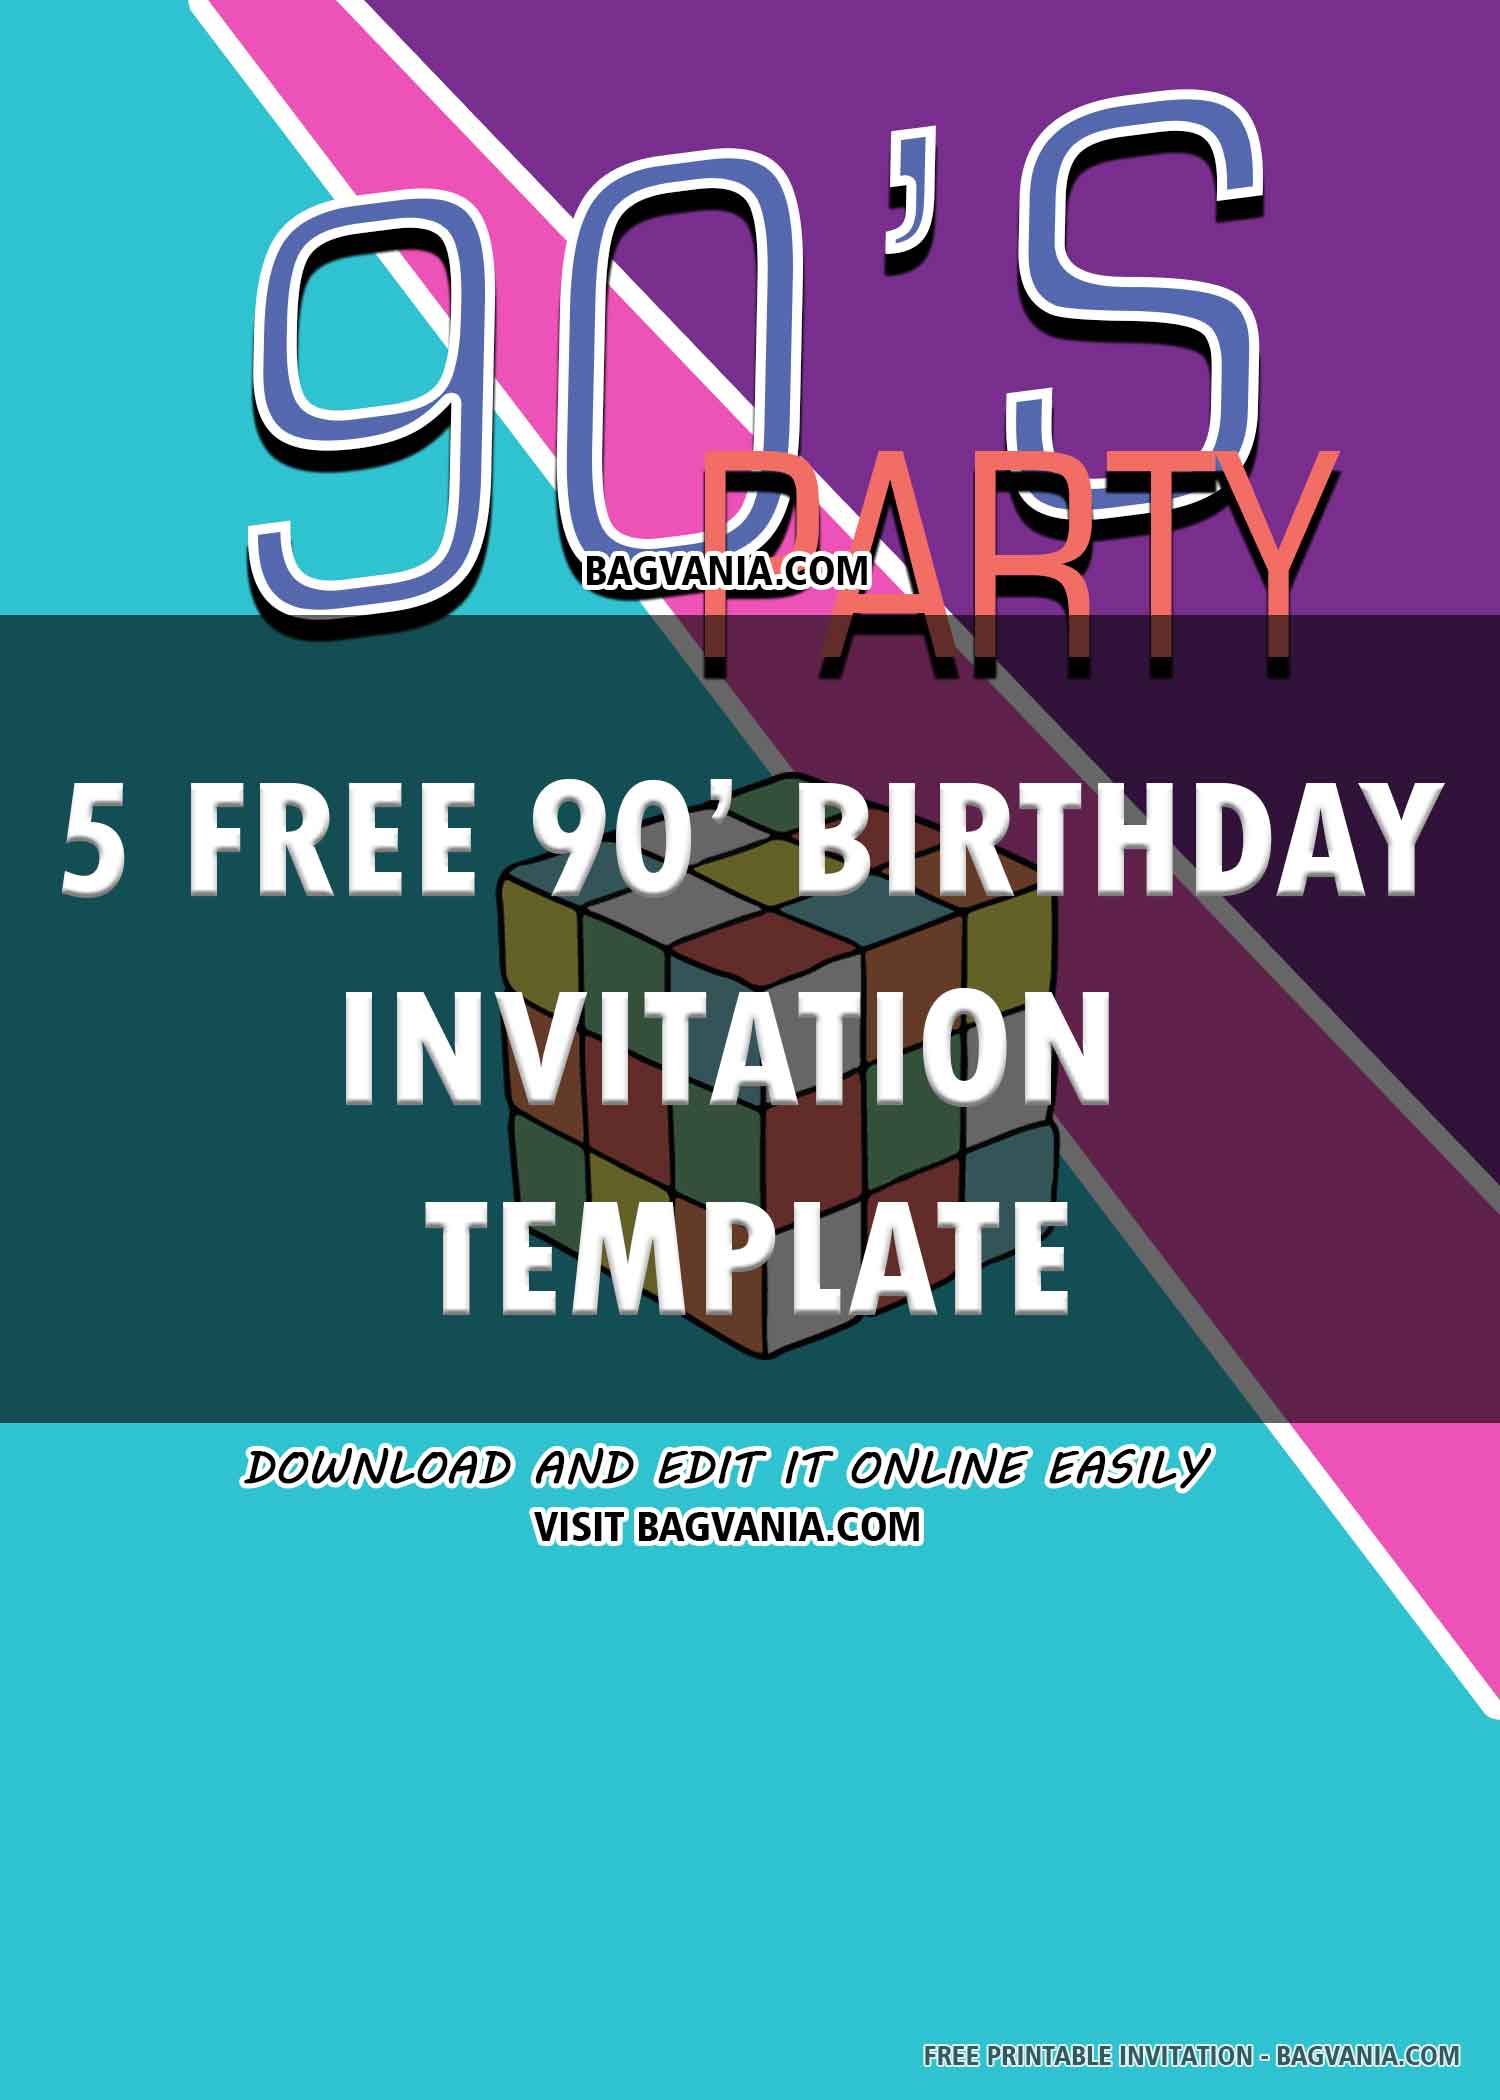 15 Cheap Birthday Party Ideas FREE Printable Birthday Invitation